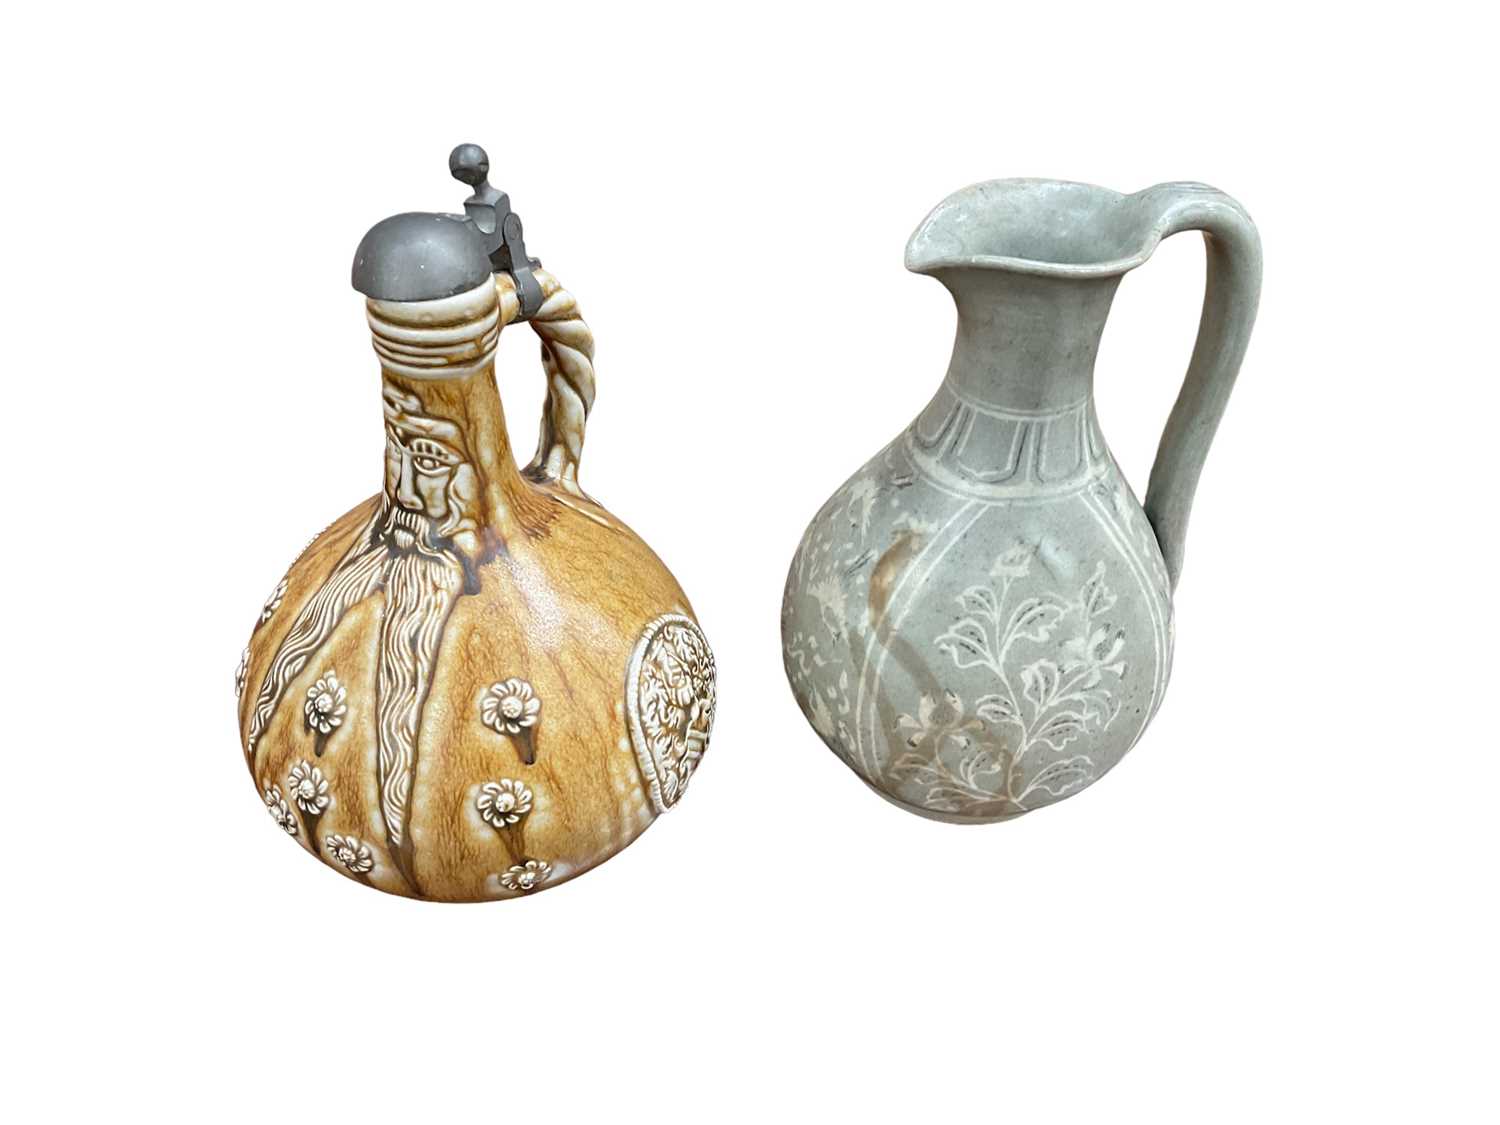 Korean celadon glazed pottery ever and a German saltglazed pottery bellarmine jug (2)